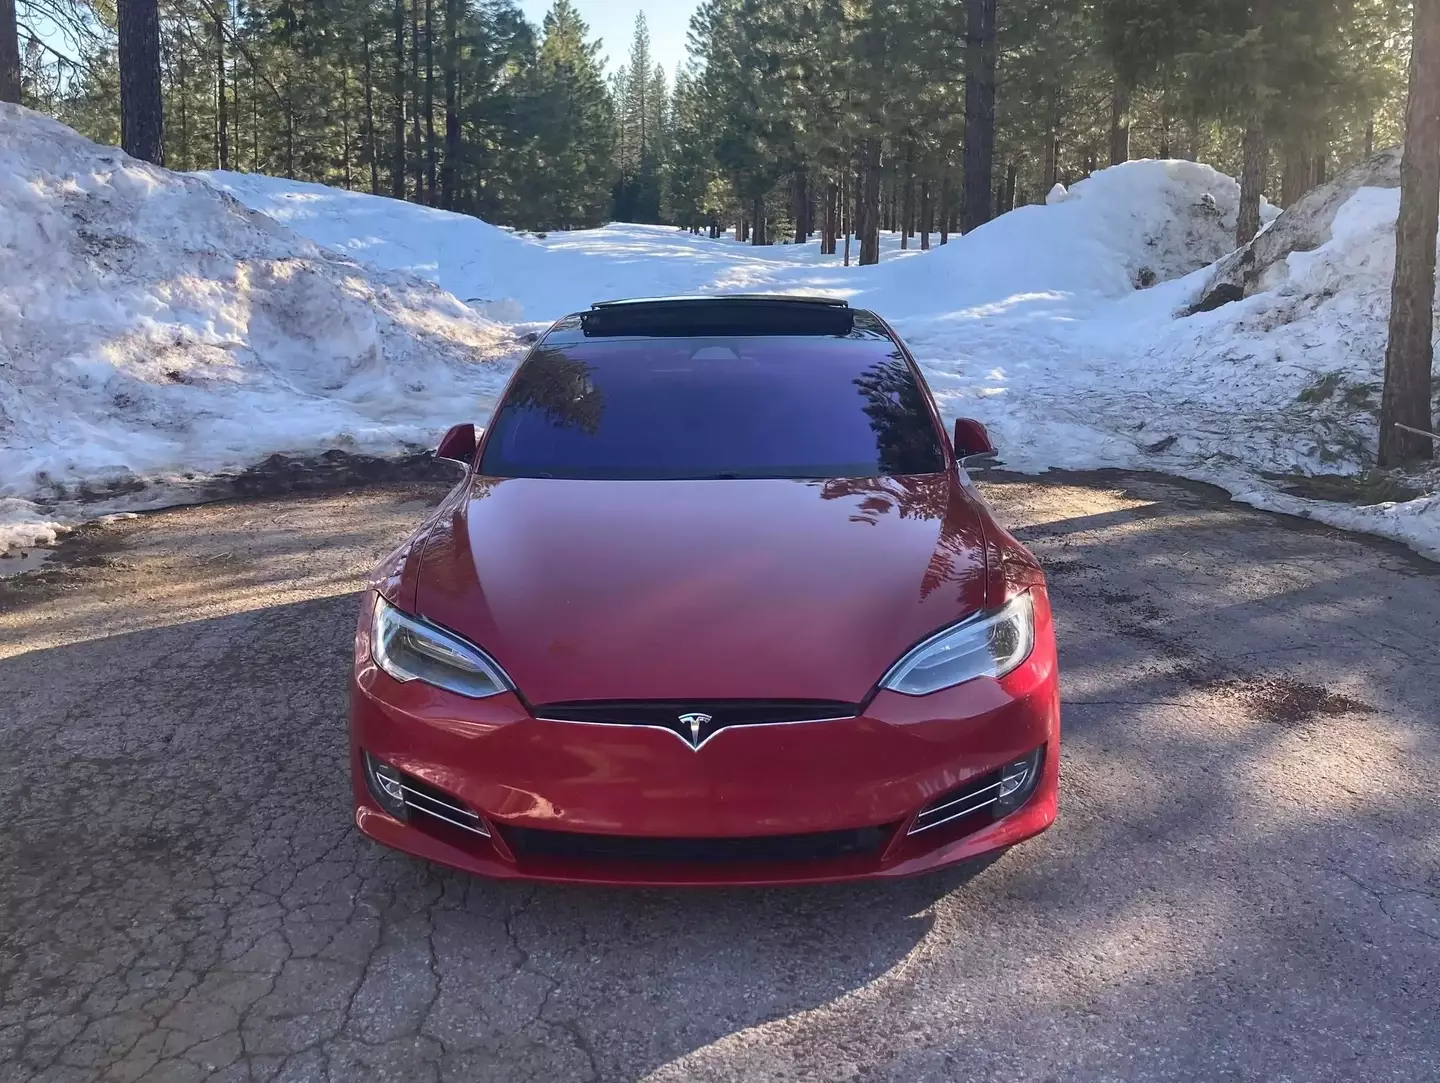 Shelton travelled 1300 miles in his 2017 Tesla.